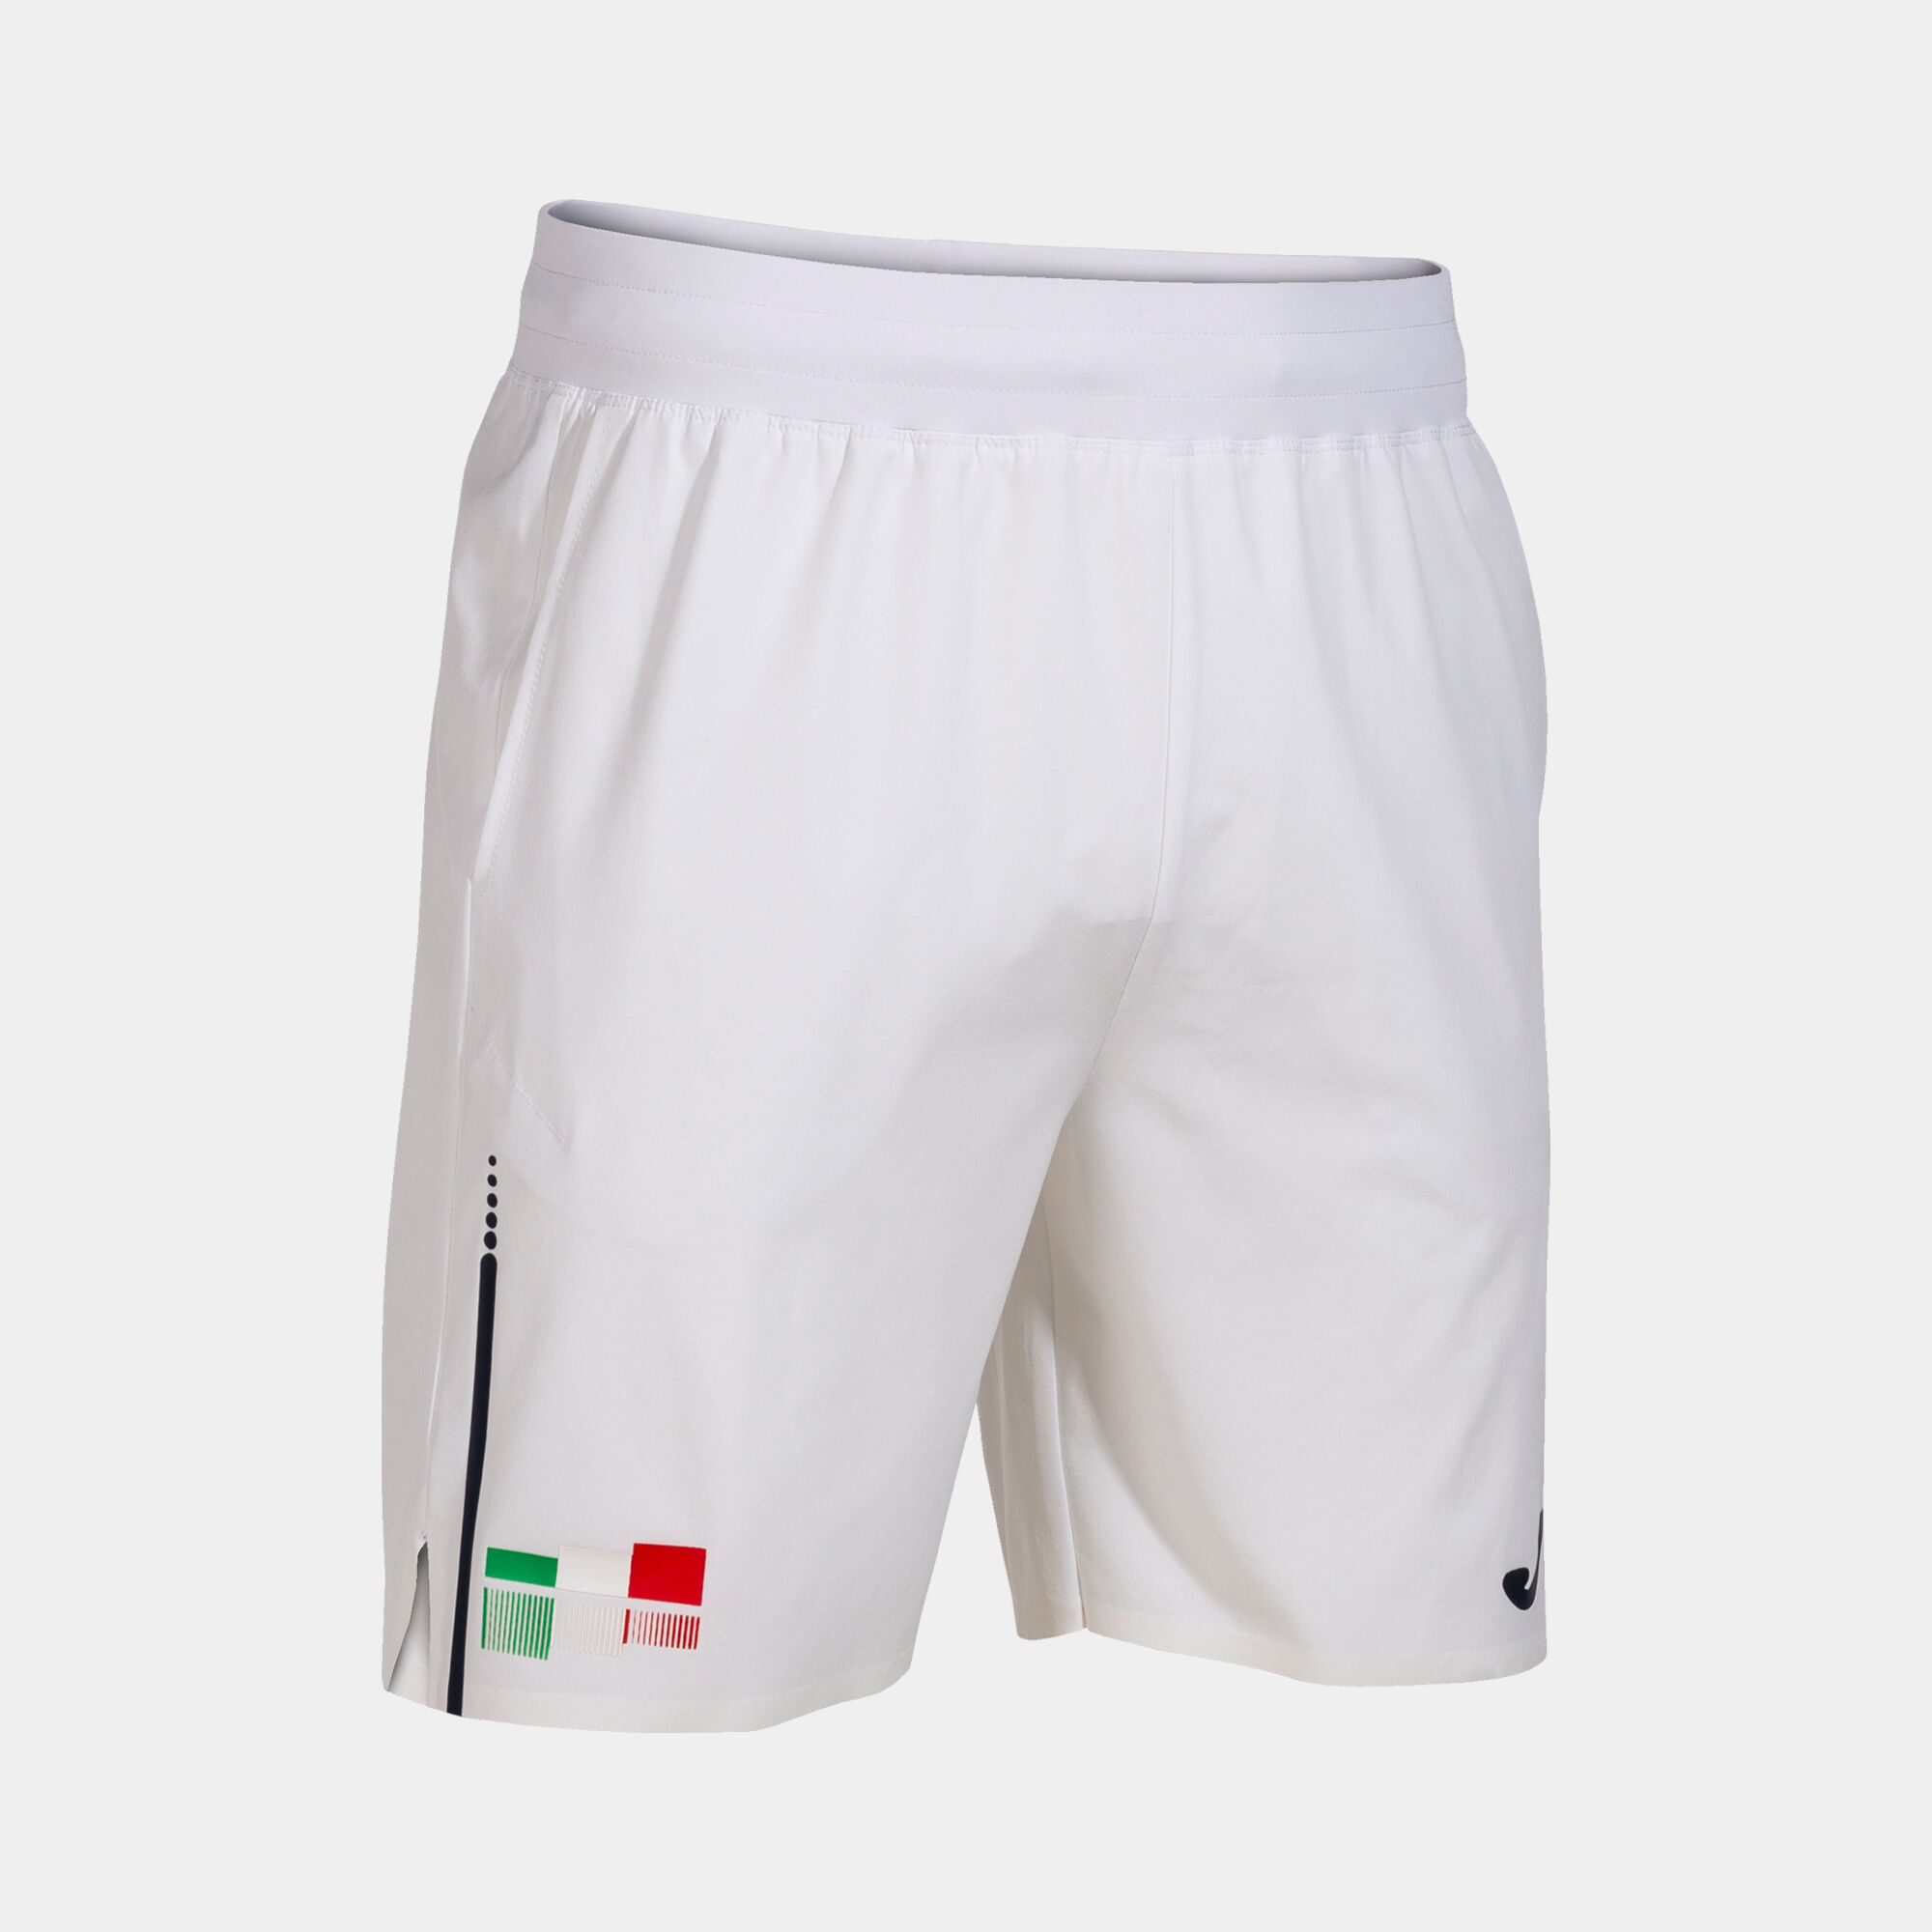 Pantaloncini Federazione Italiana Tennis